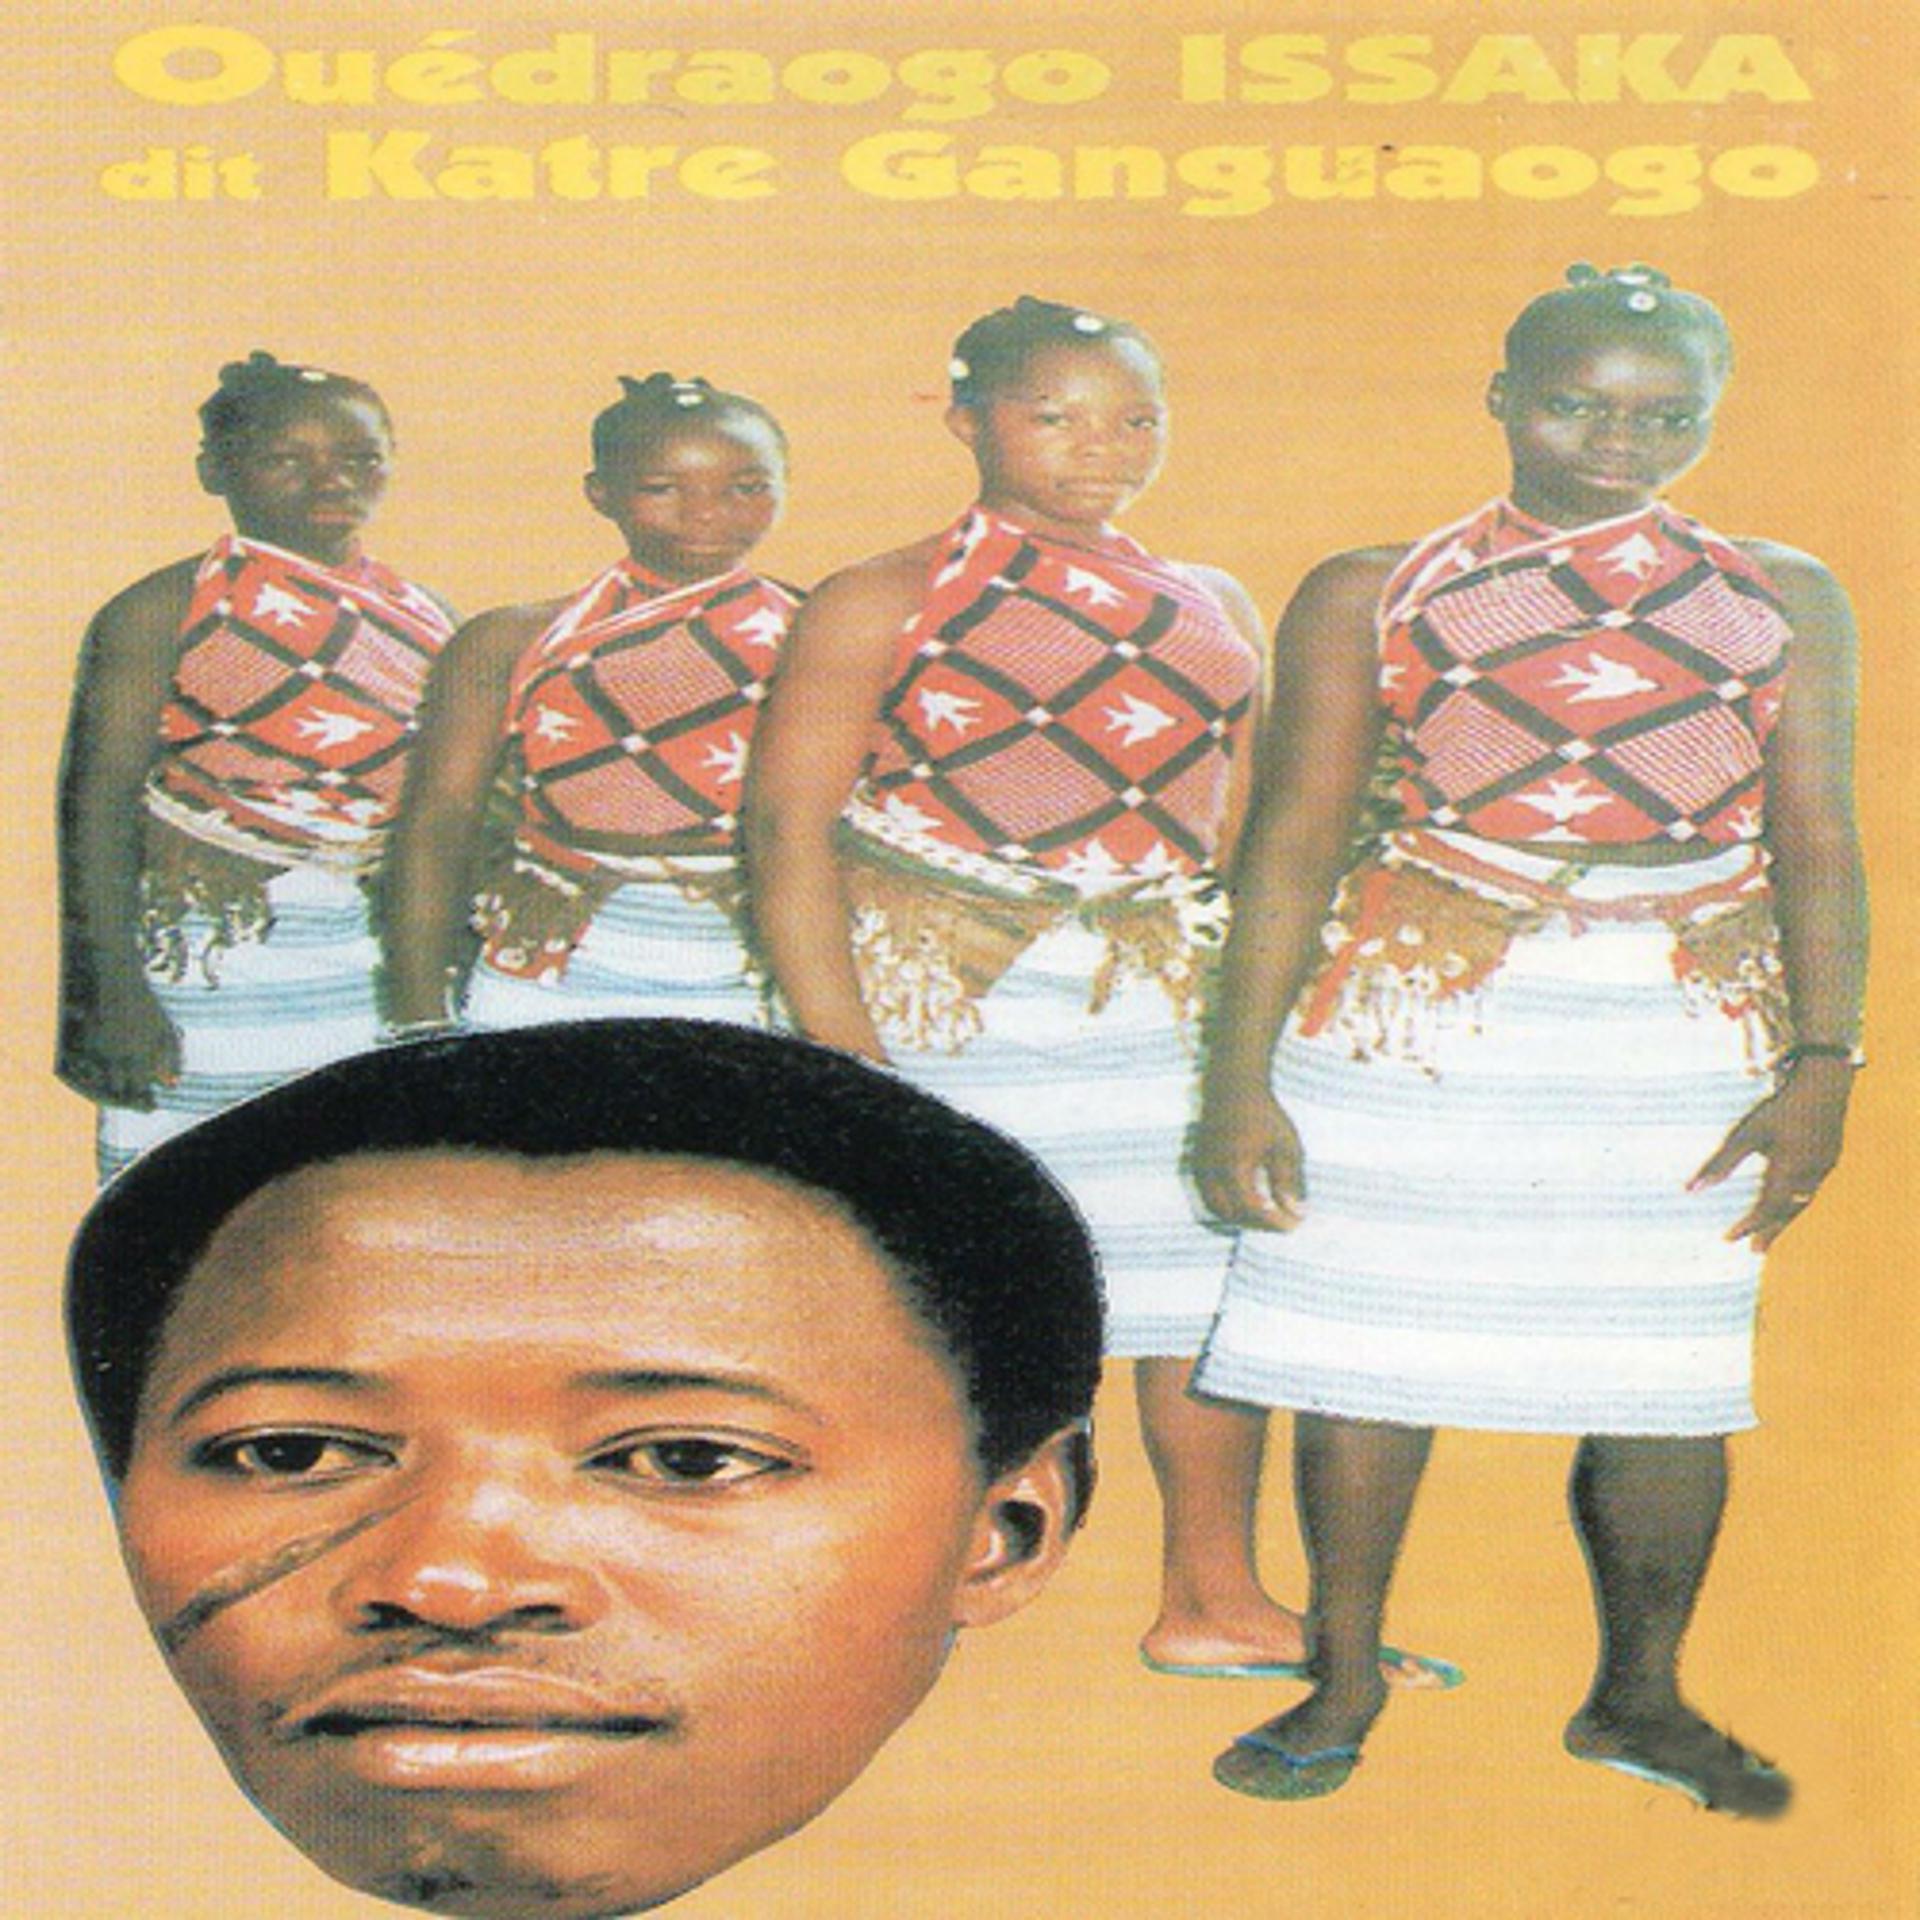 Постер альбома Ouedraogo Issaka dit Katre Ganguaogo